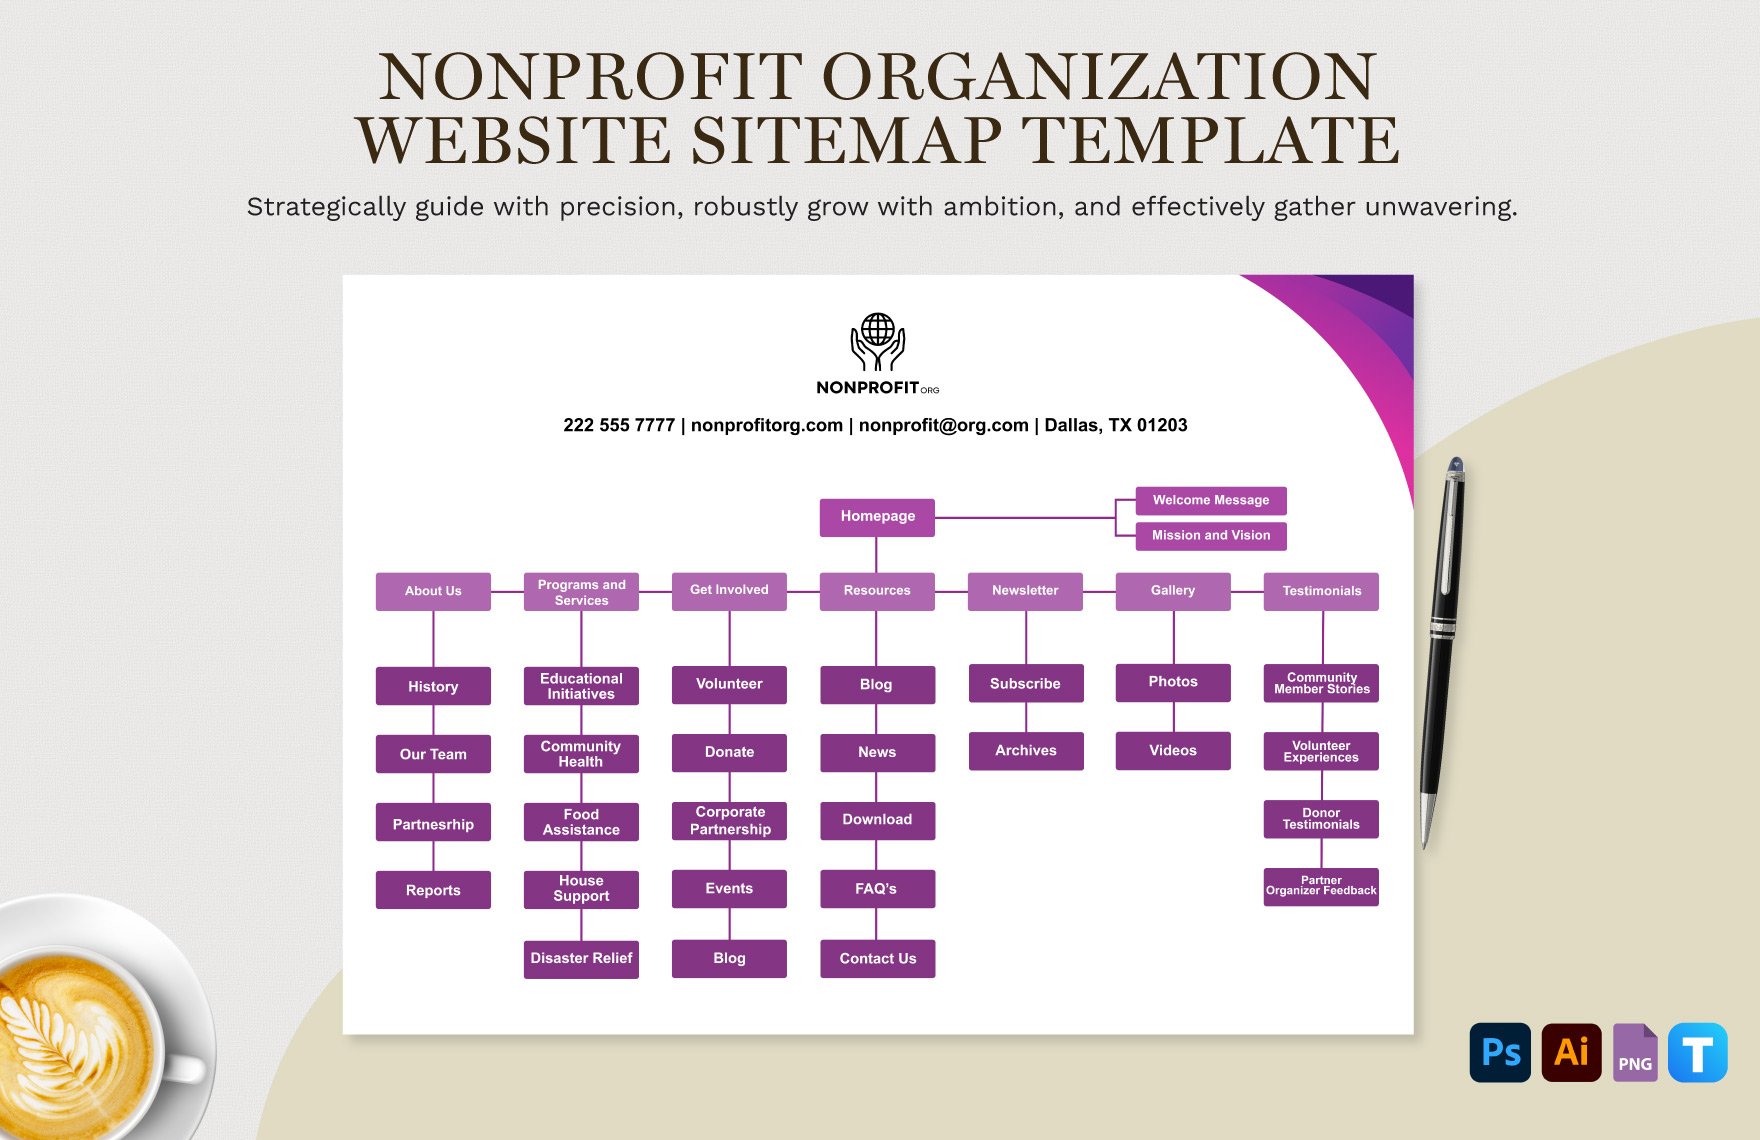 Nonprofit Organization Website Sitemap Template in Illustrator, PSD, PNG